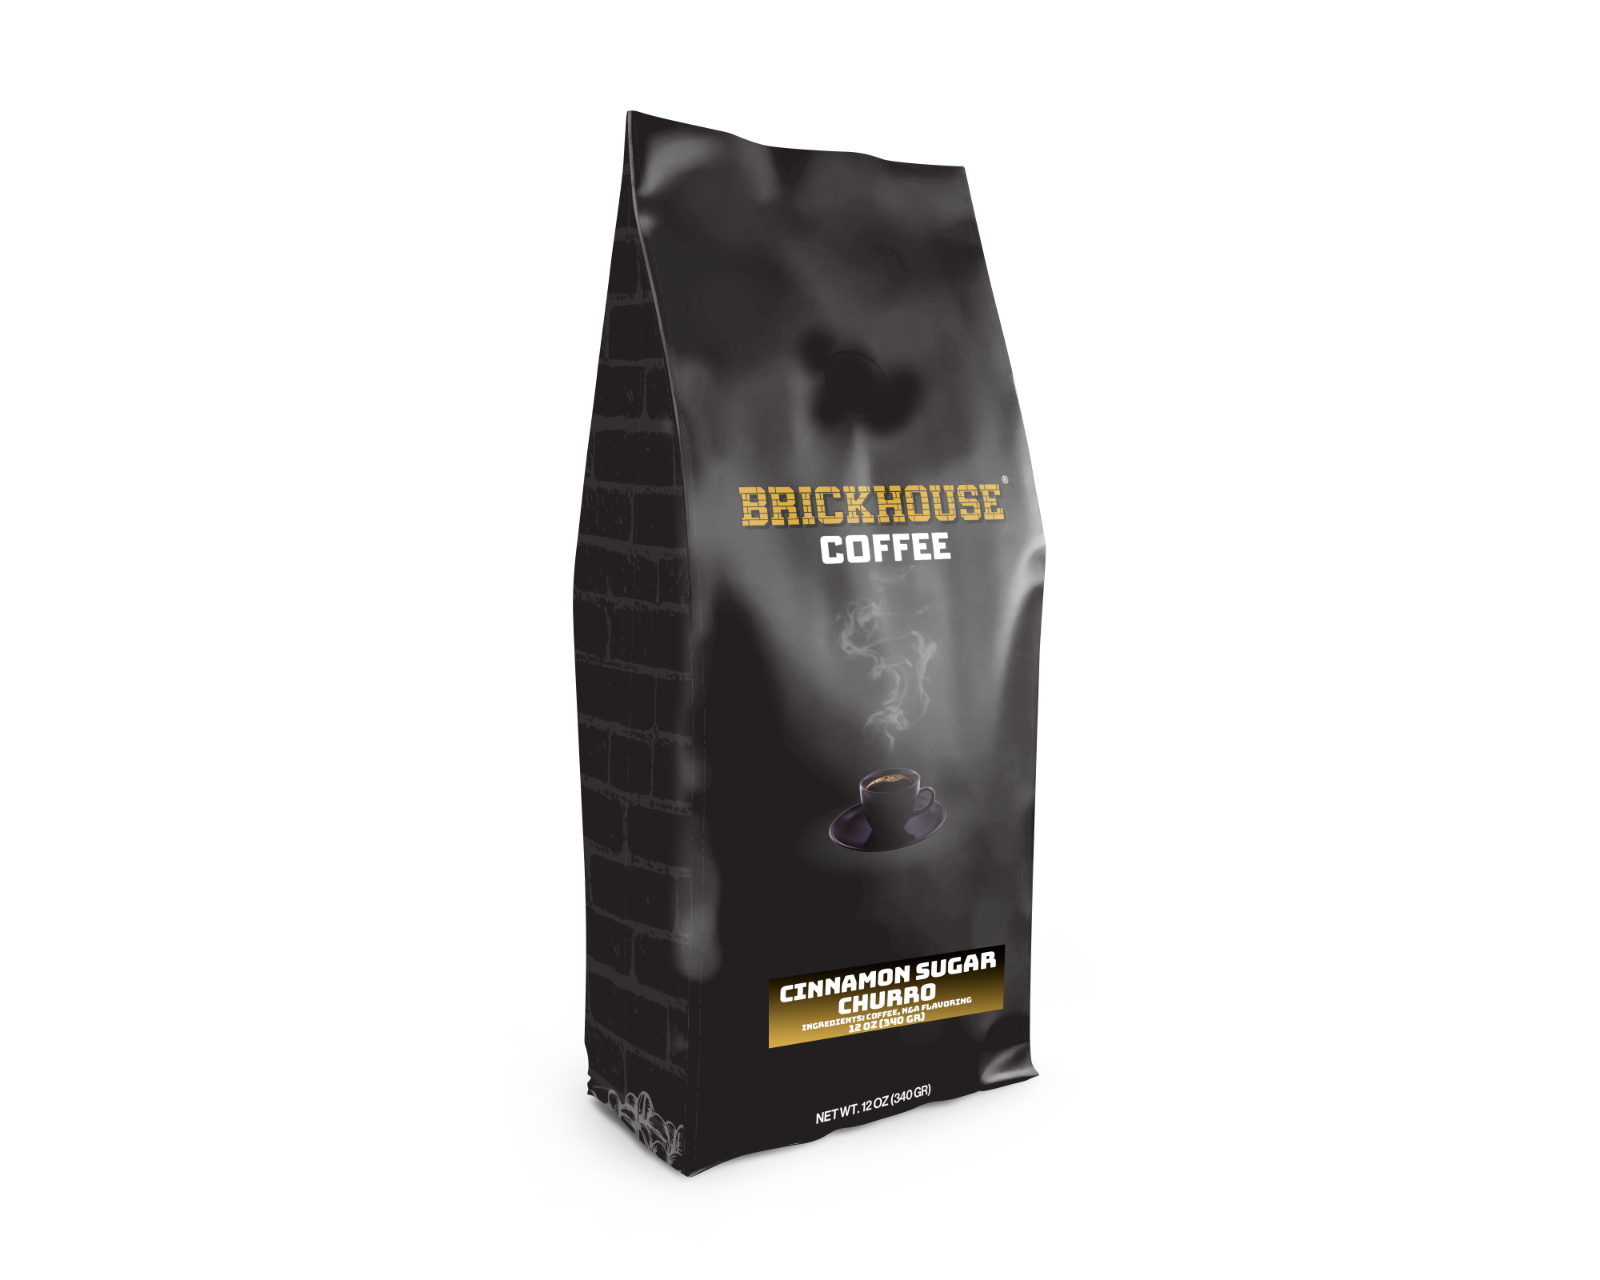 Primary image for Brickhouse Coffee, Ground Coffee, 12oz bag, Cinnamon Sugar Churro